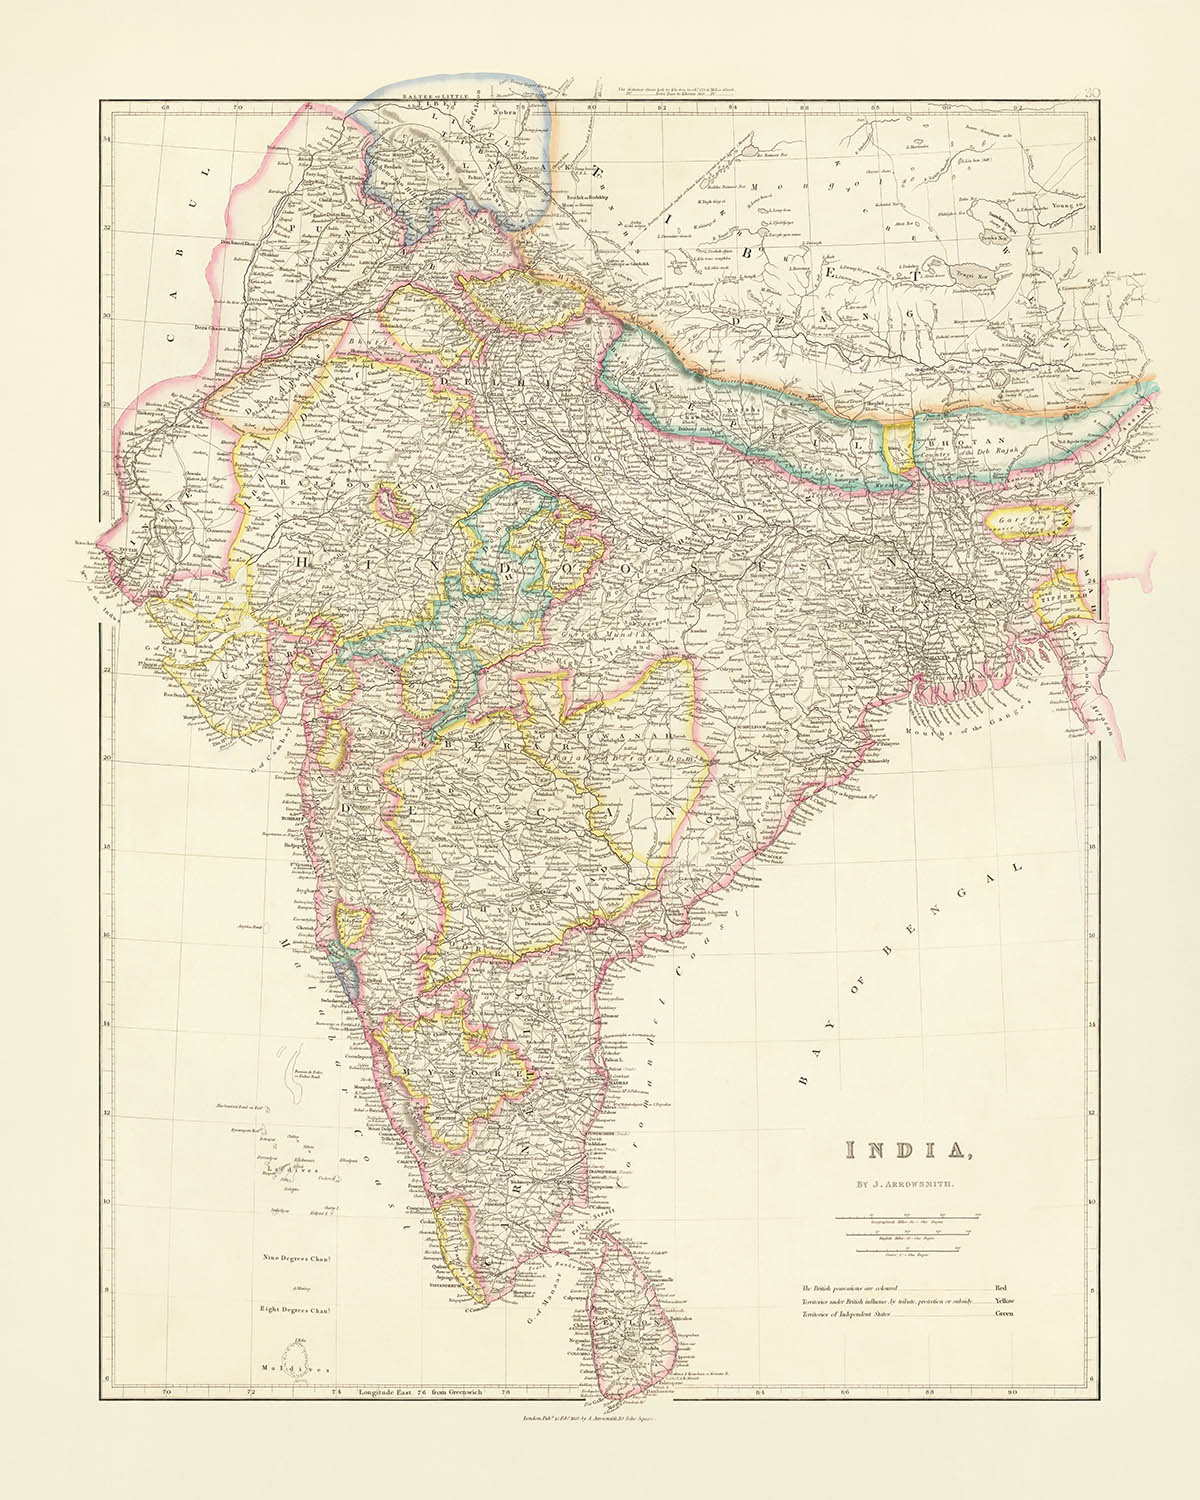 Old Map of India, Pakistan & Bangladesh by Arrowsmith, 1857: Ceylon, Tibet, Nepal, Himalayas, Ganges River Plains